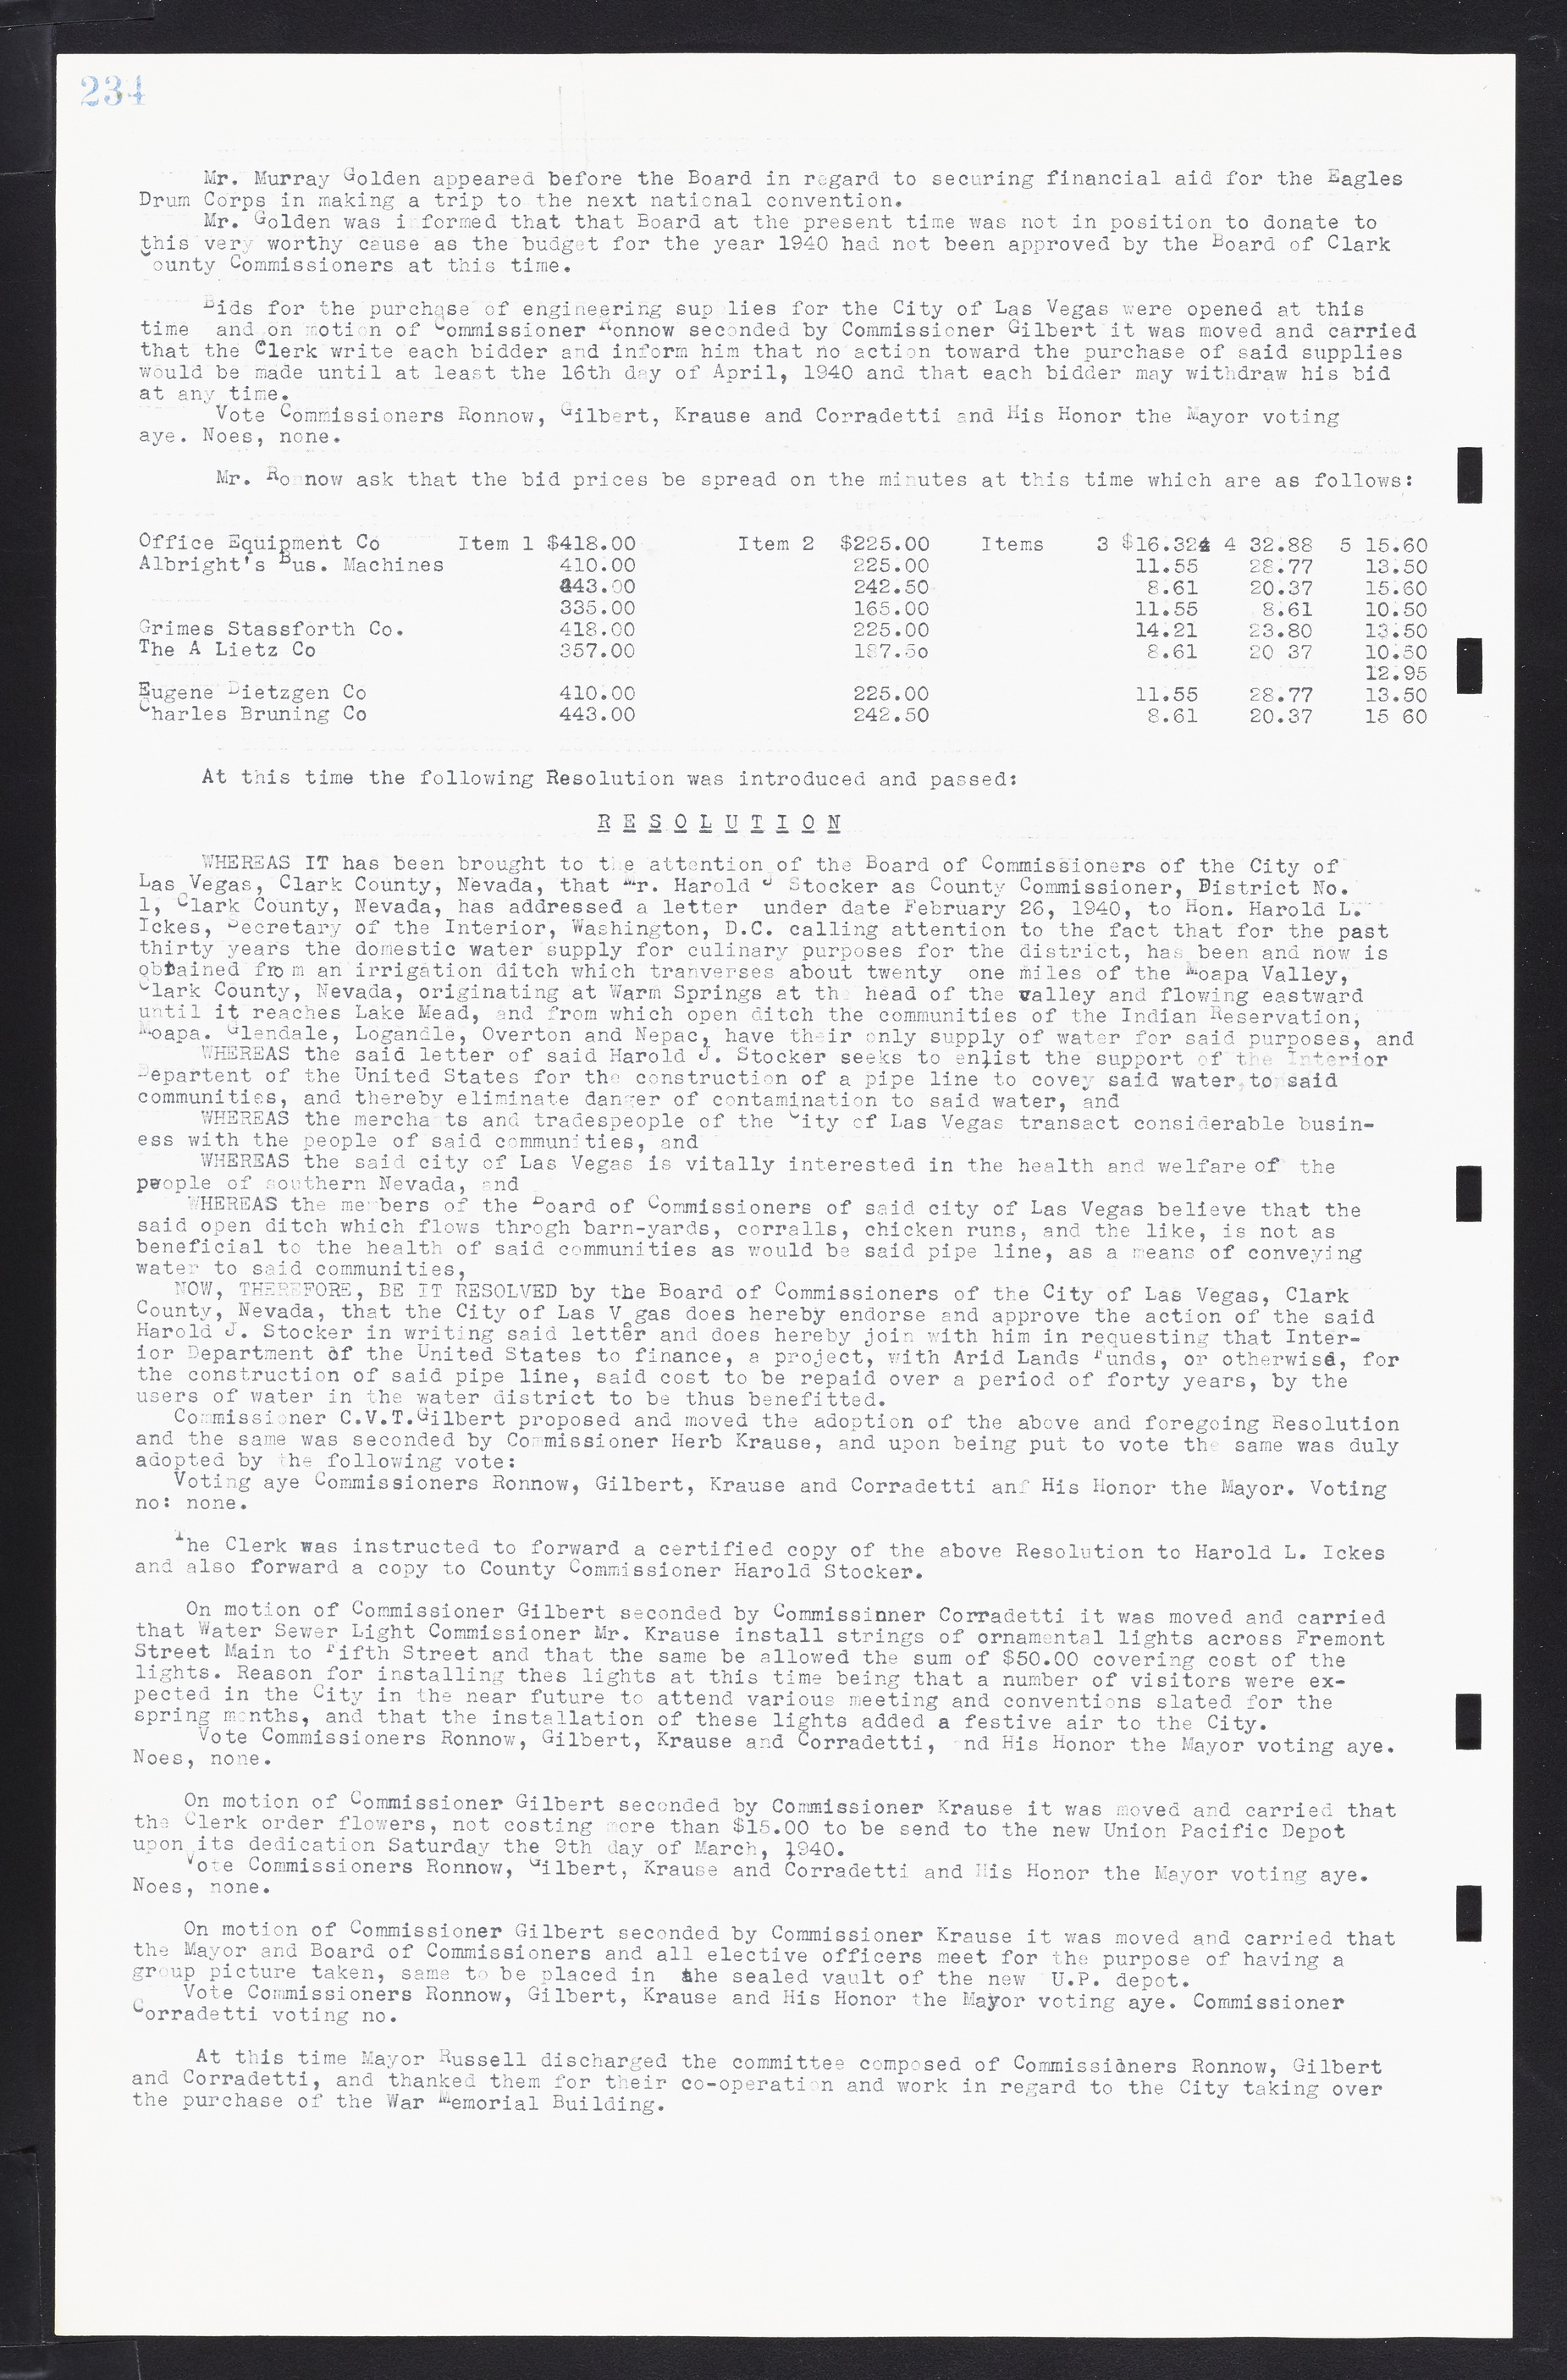 Las Vegas City Commission Minutes, February 17, 1937 to August 4, 1942, lvc000004-254